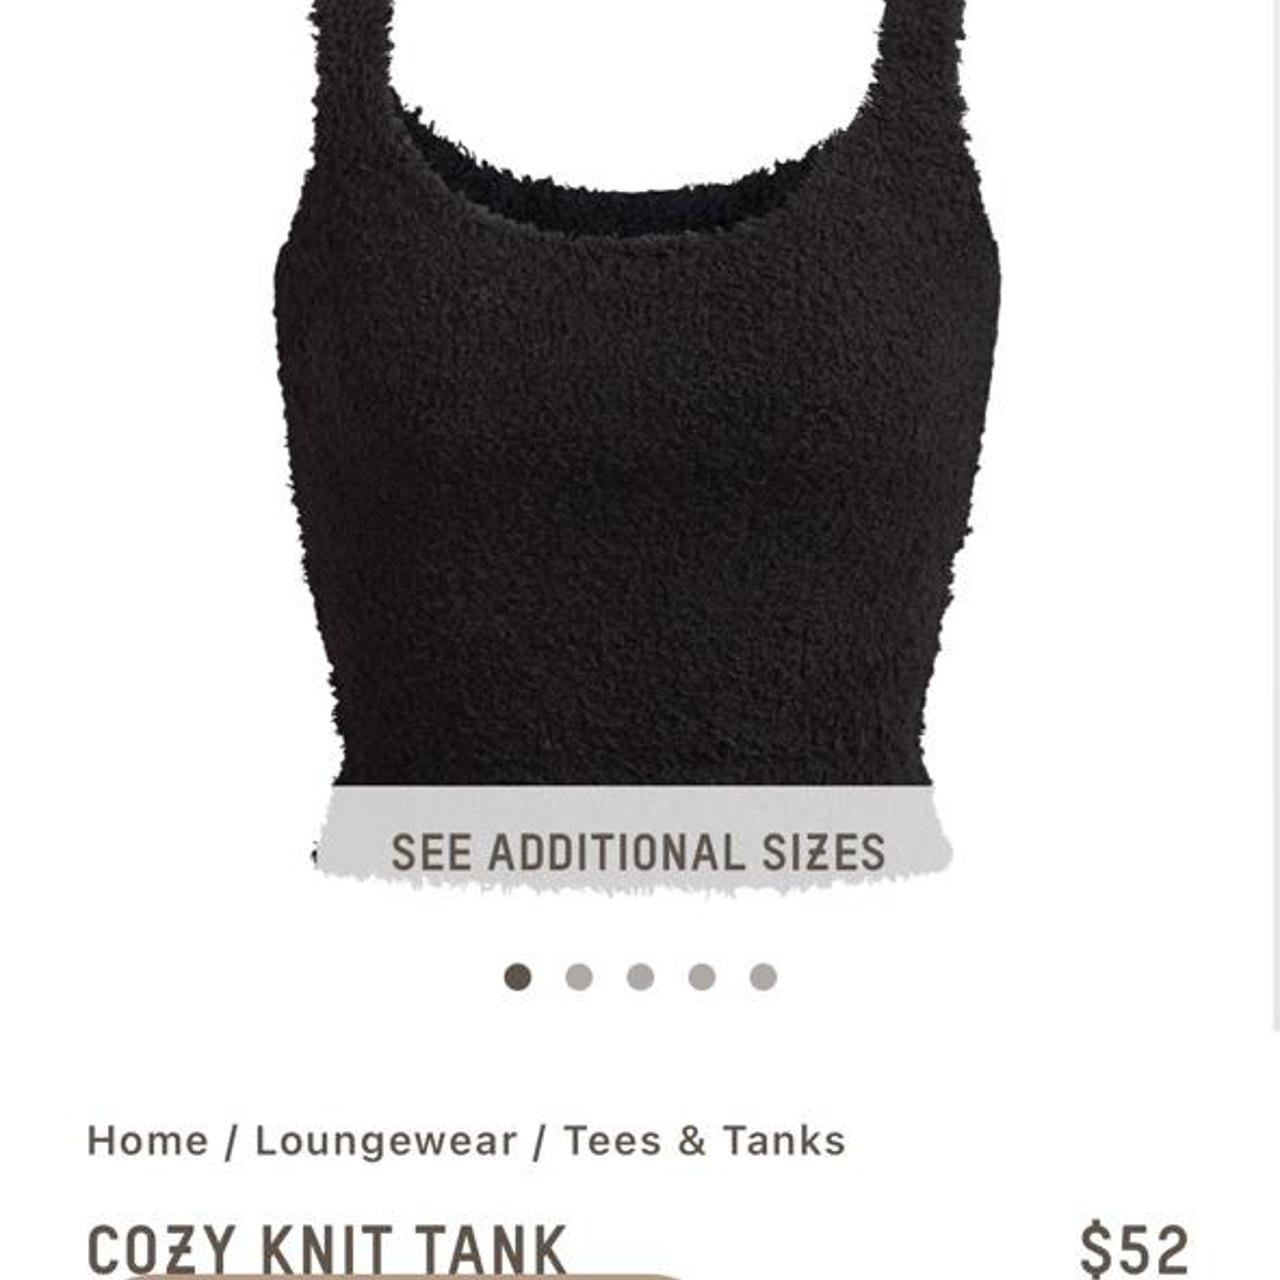 super cute skims 'cozy knit tank' in onyx / black 🖤 - Depop